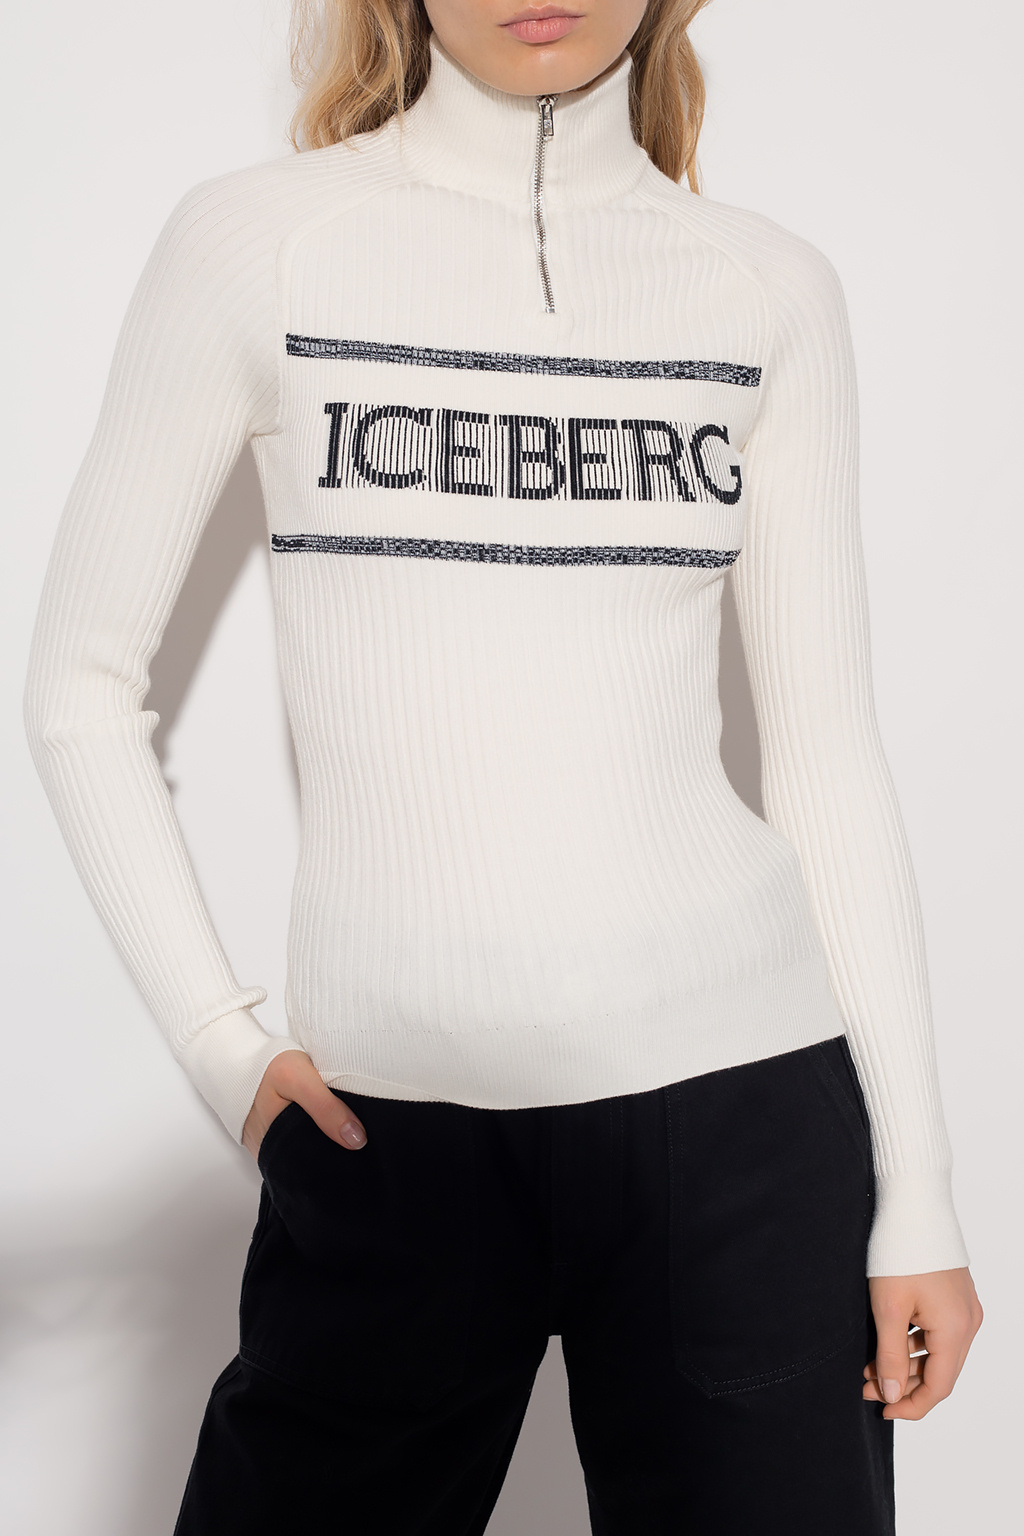 Iceberg mens logo polo shirts